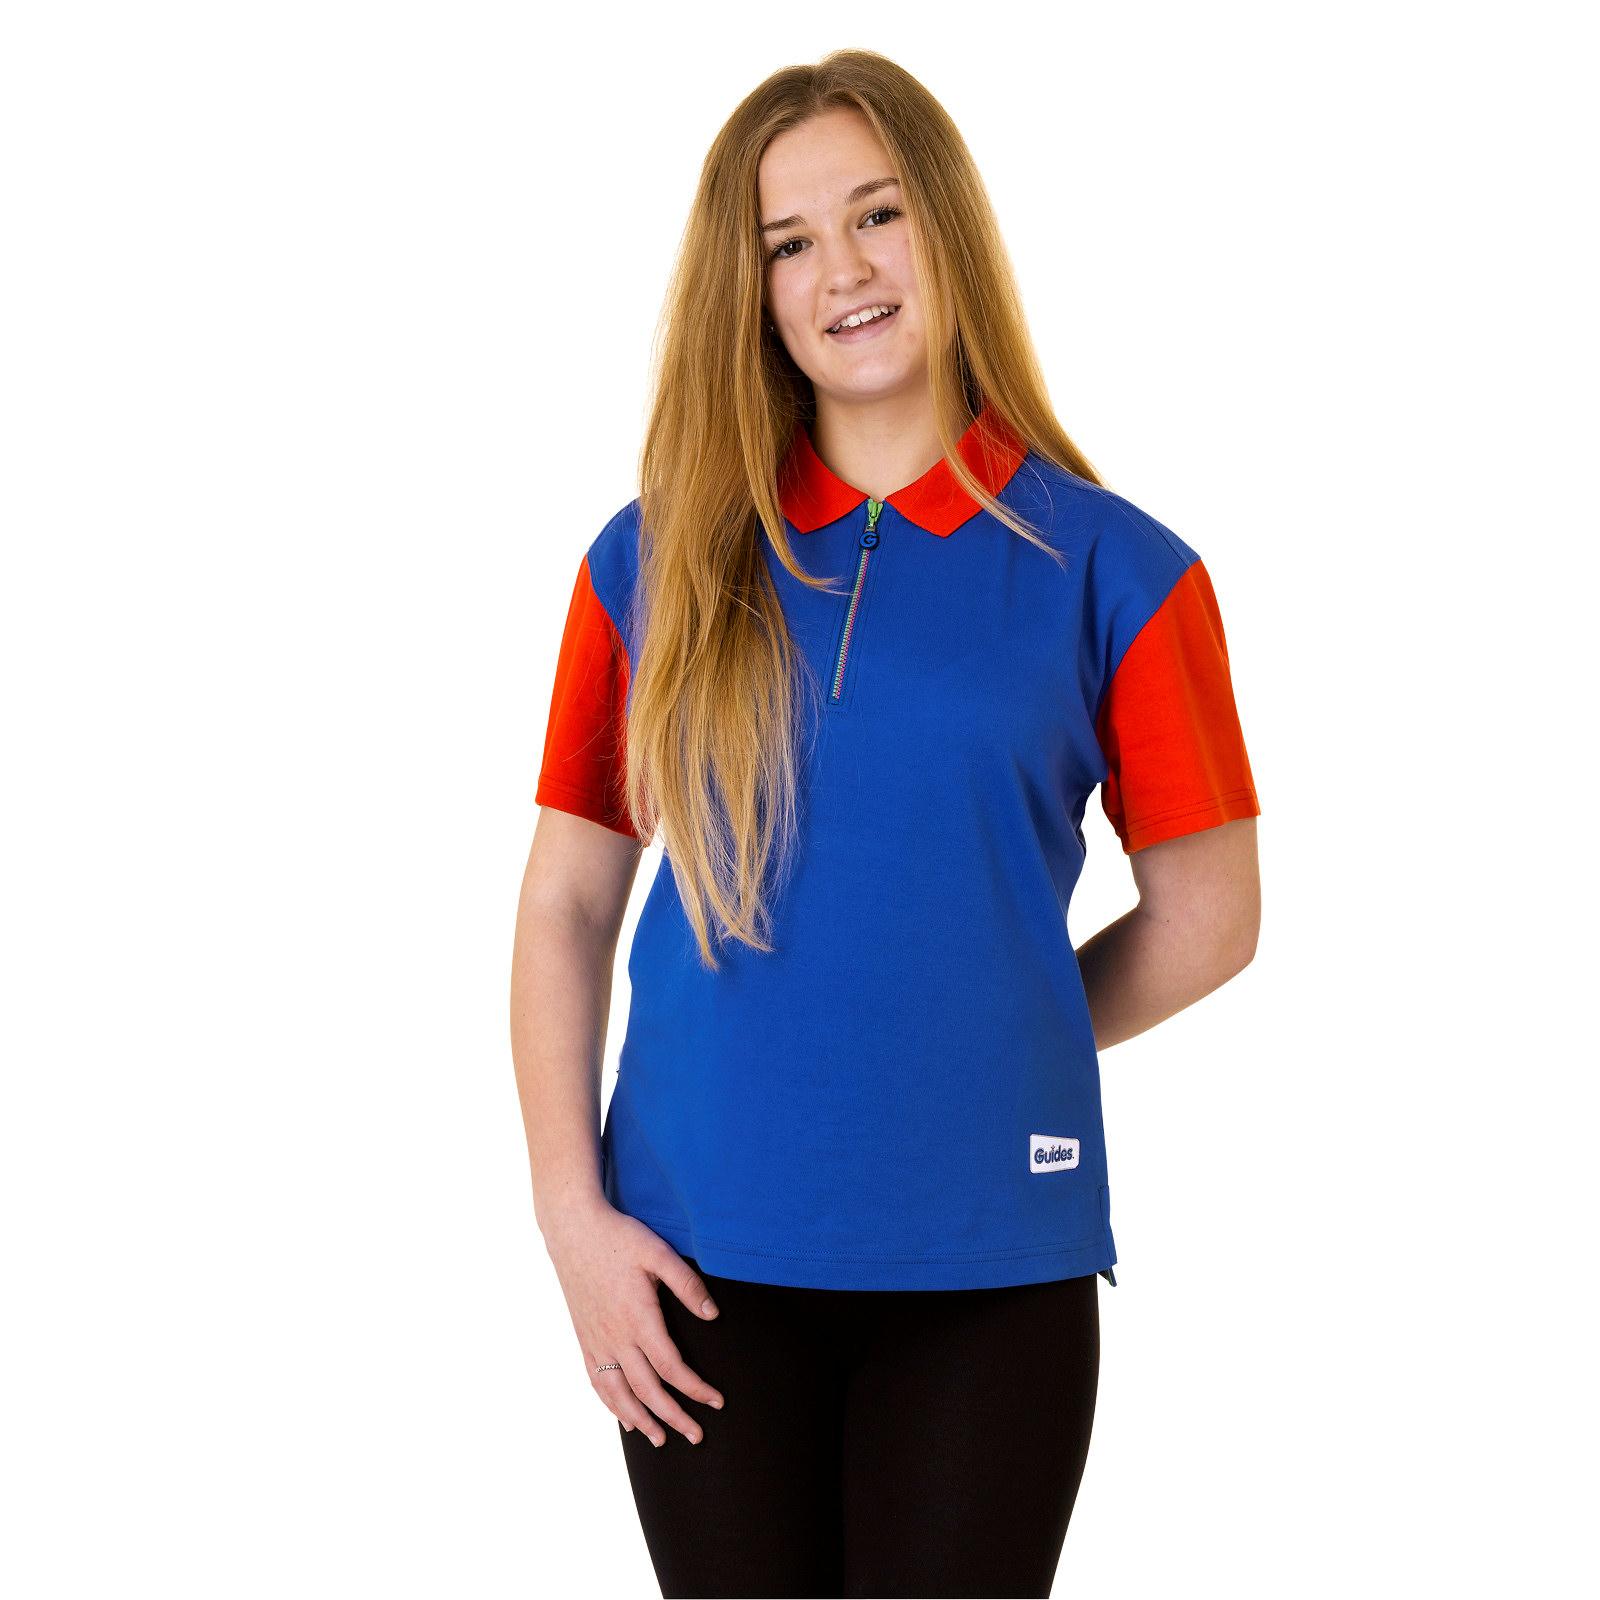 Guides Official Uniform Polo Shirt all Sizes Girl Guiding